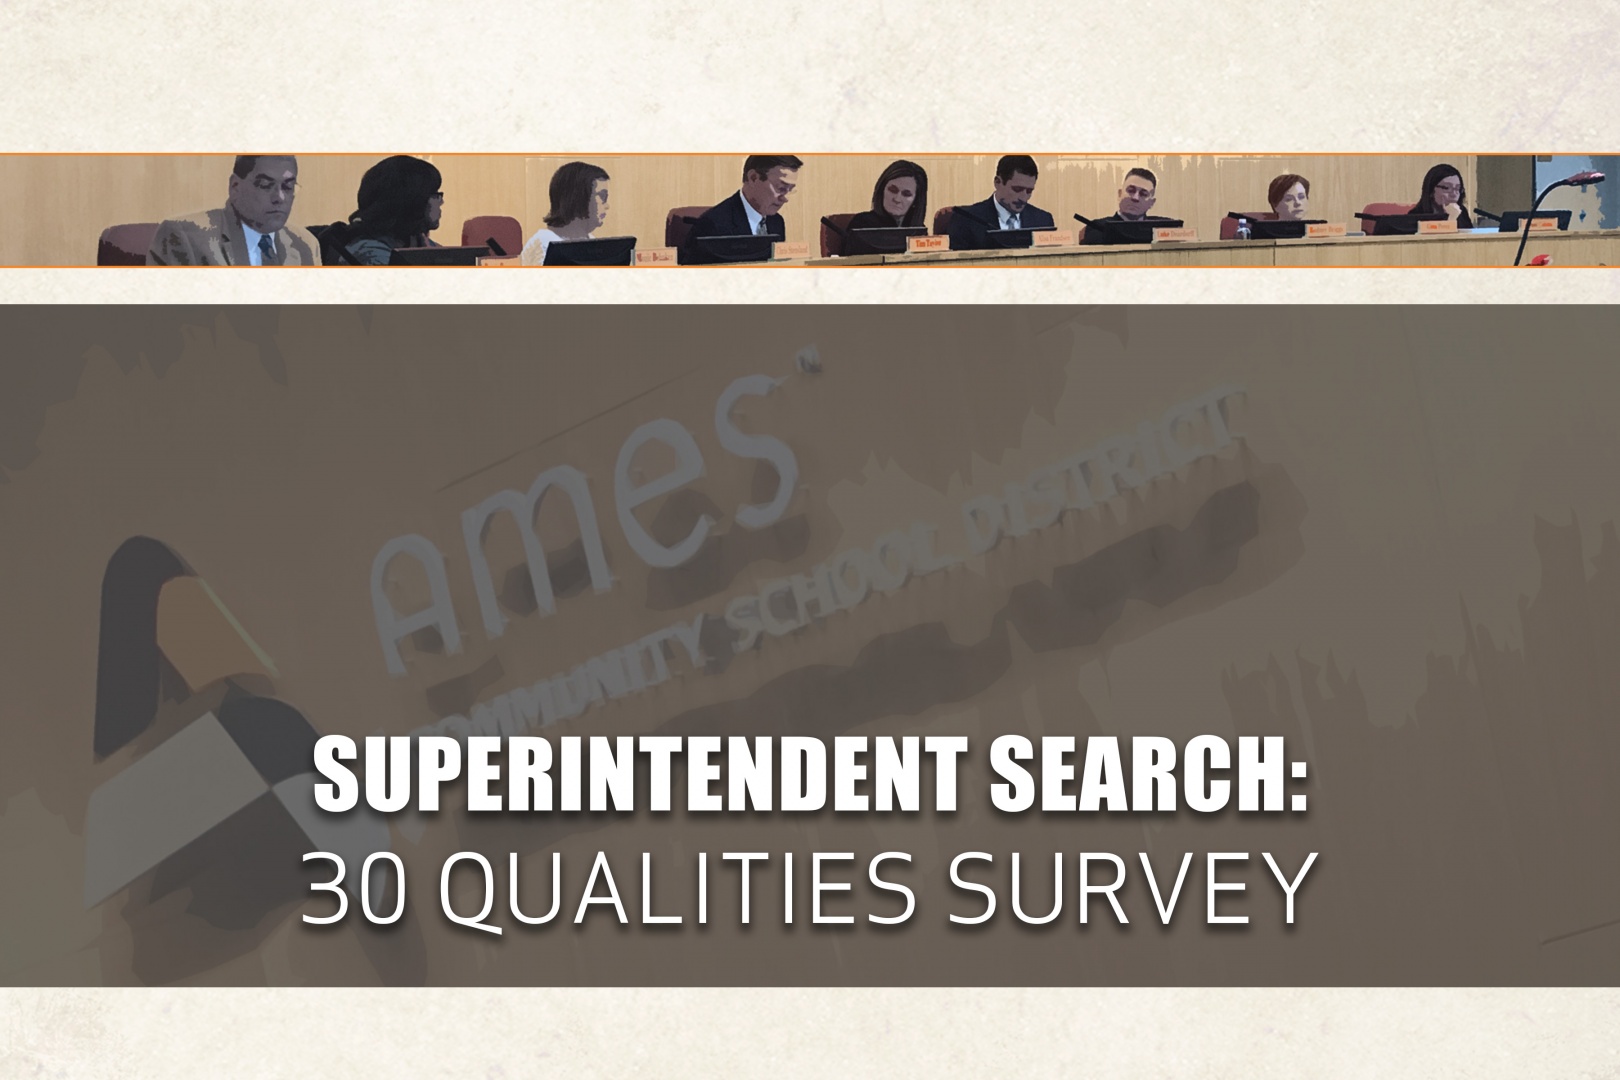 Superintendent Qualities Survey Graphic